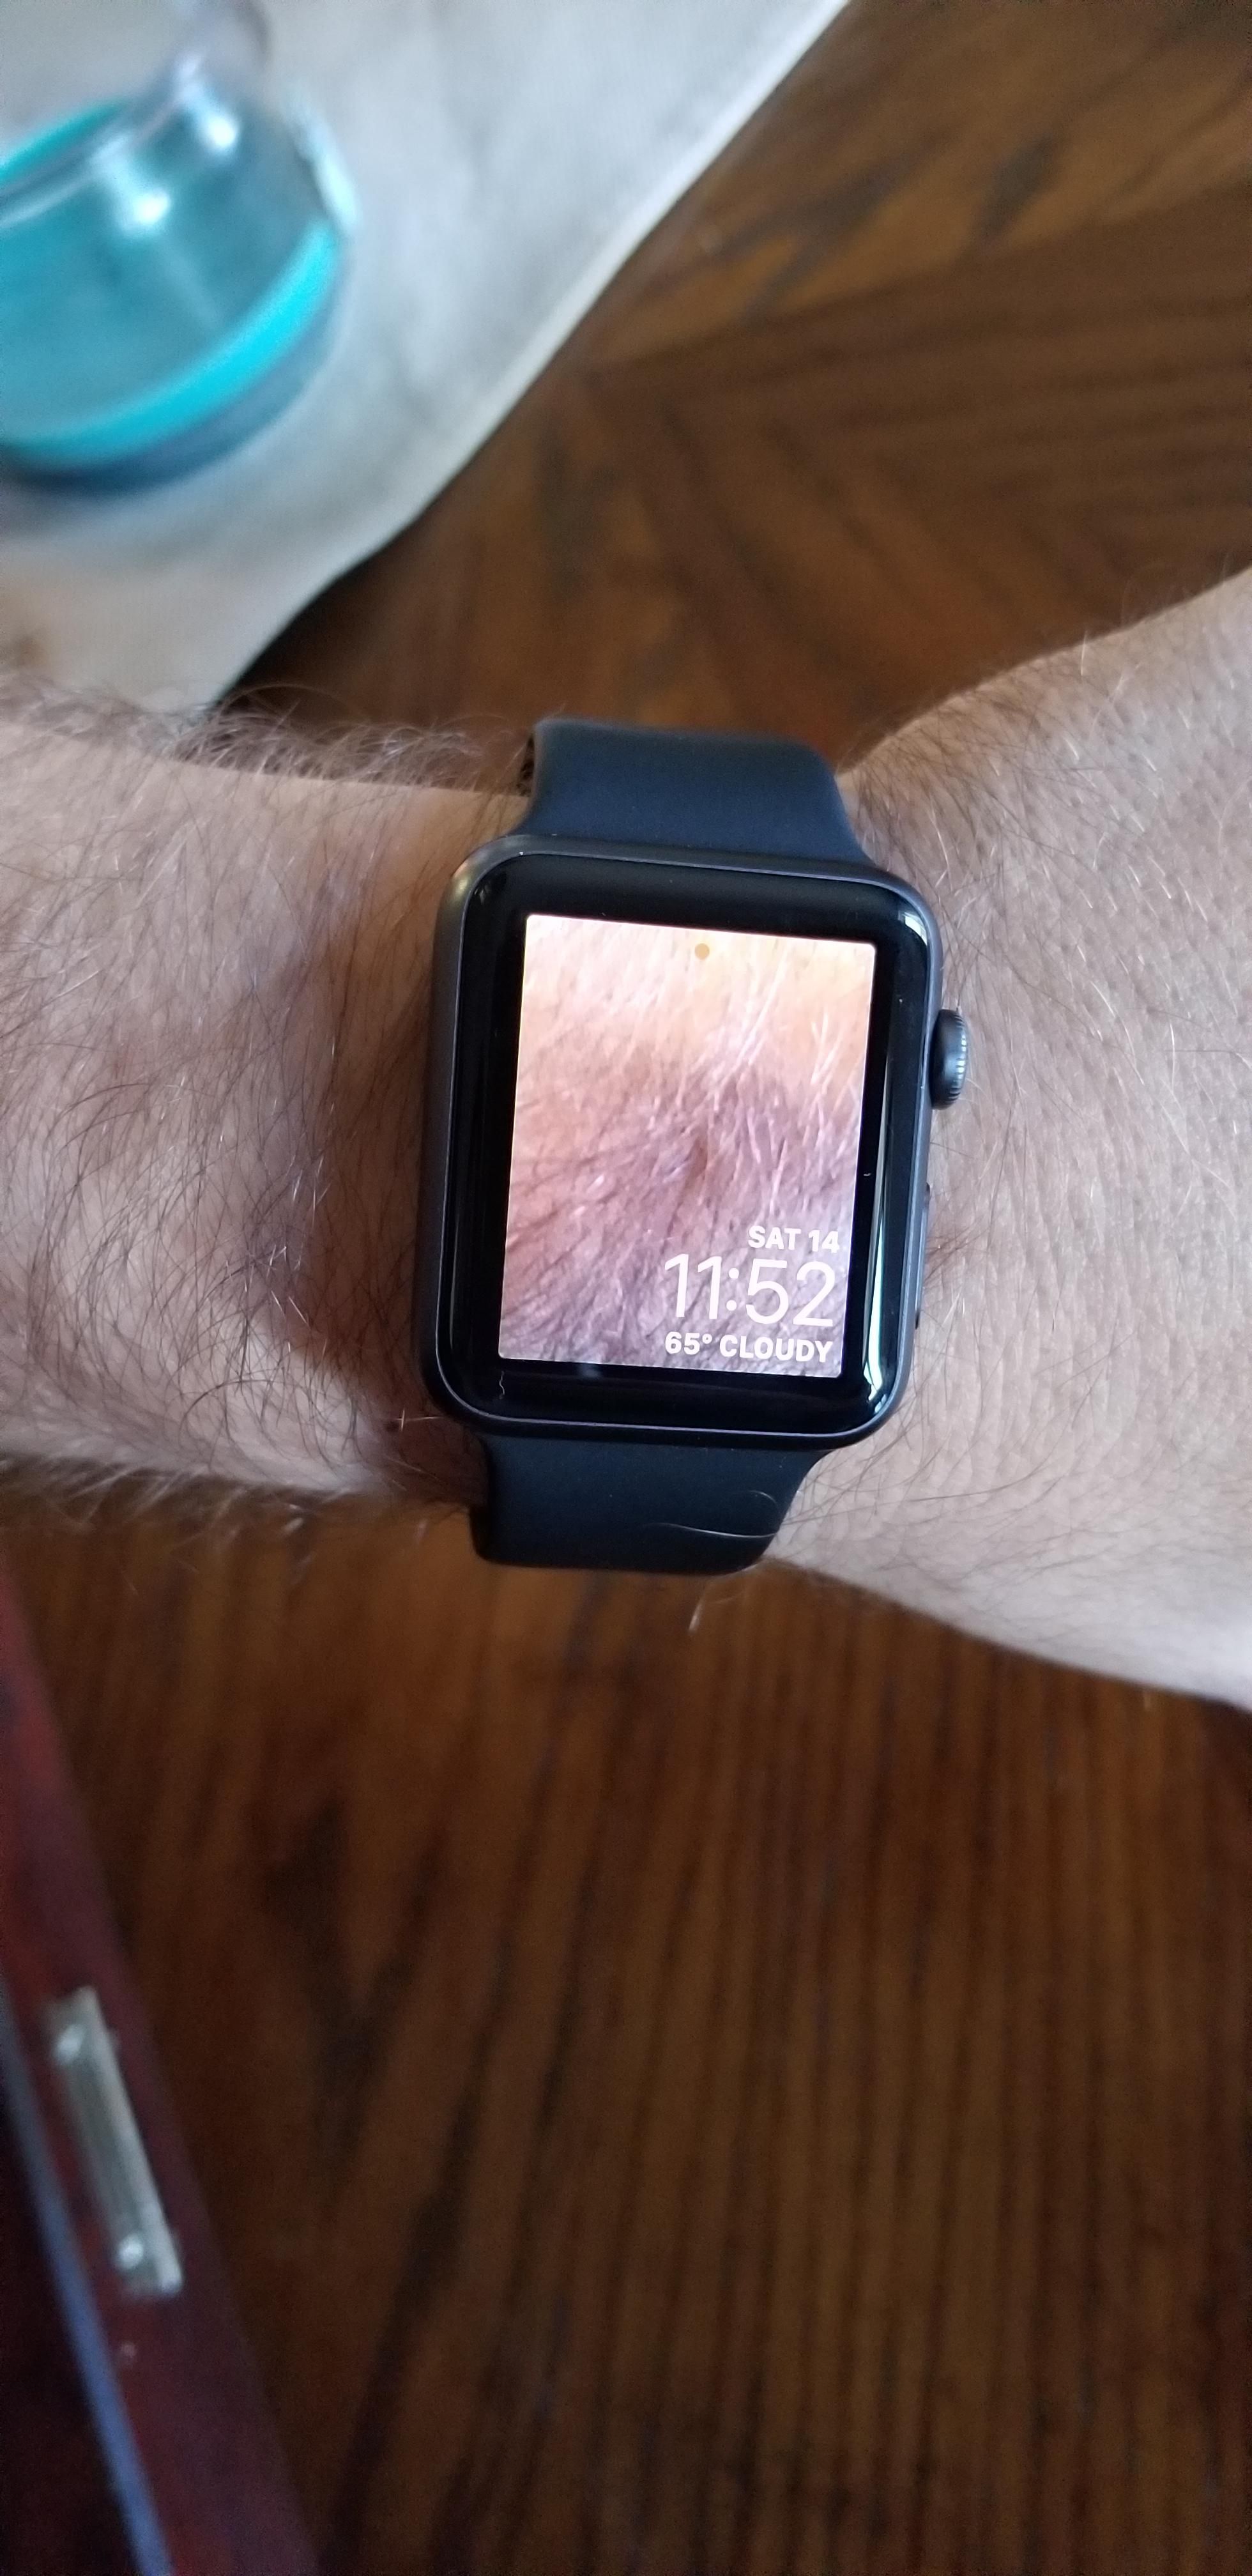 My friend's Apple Watch background